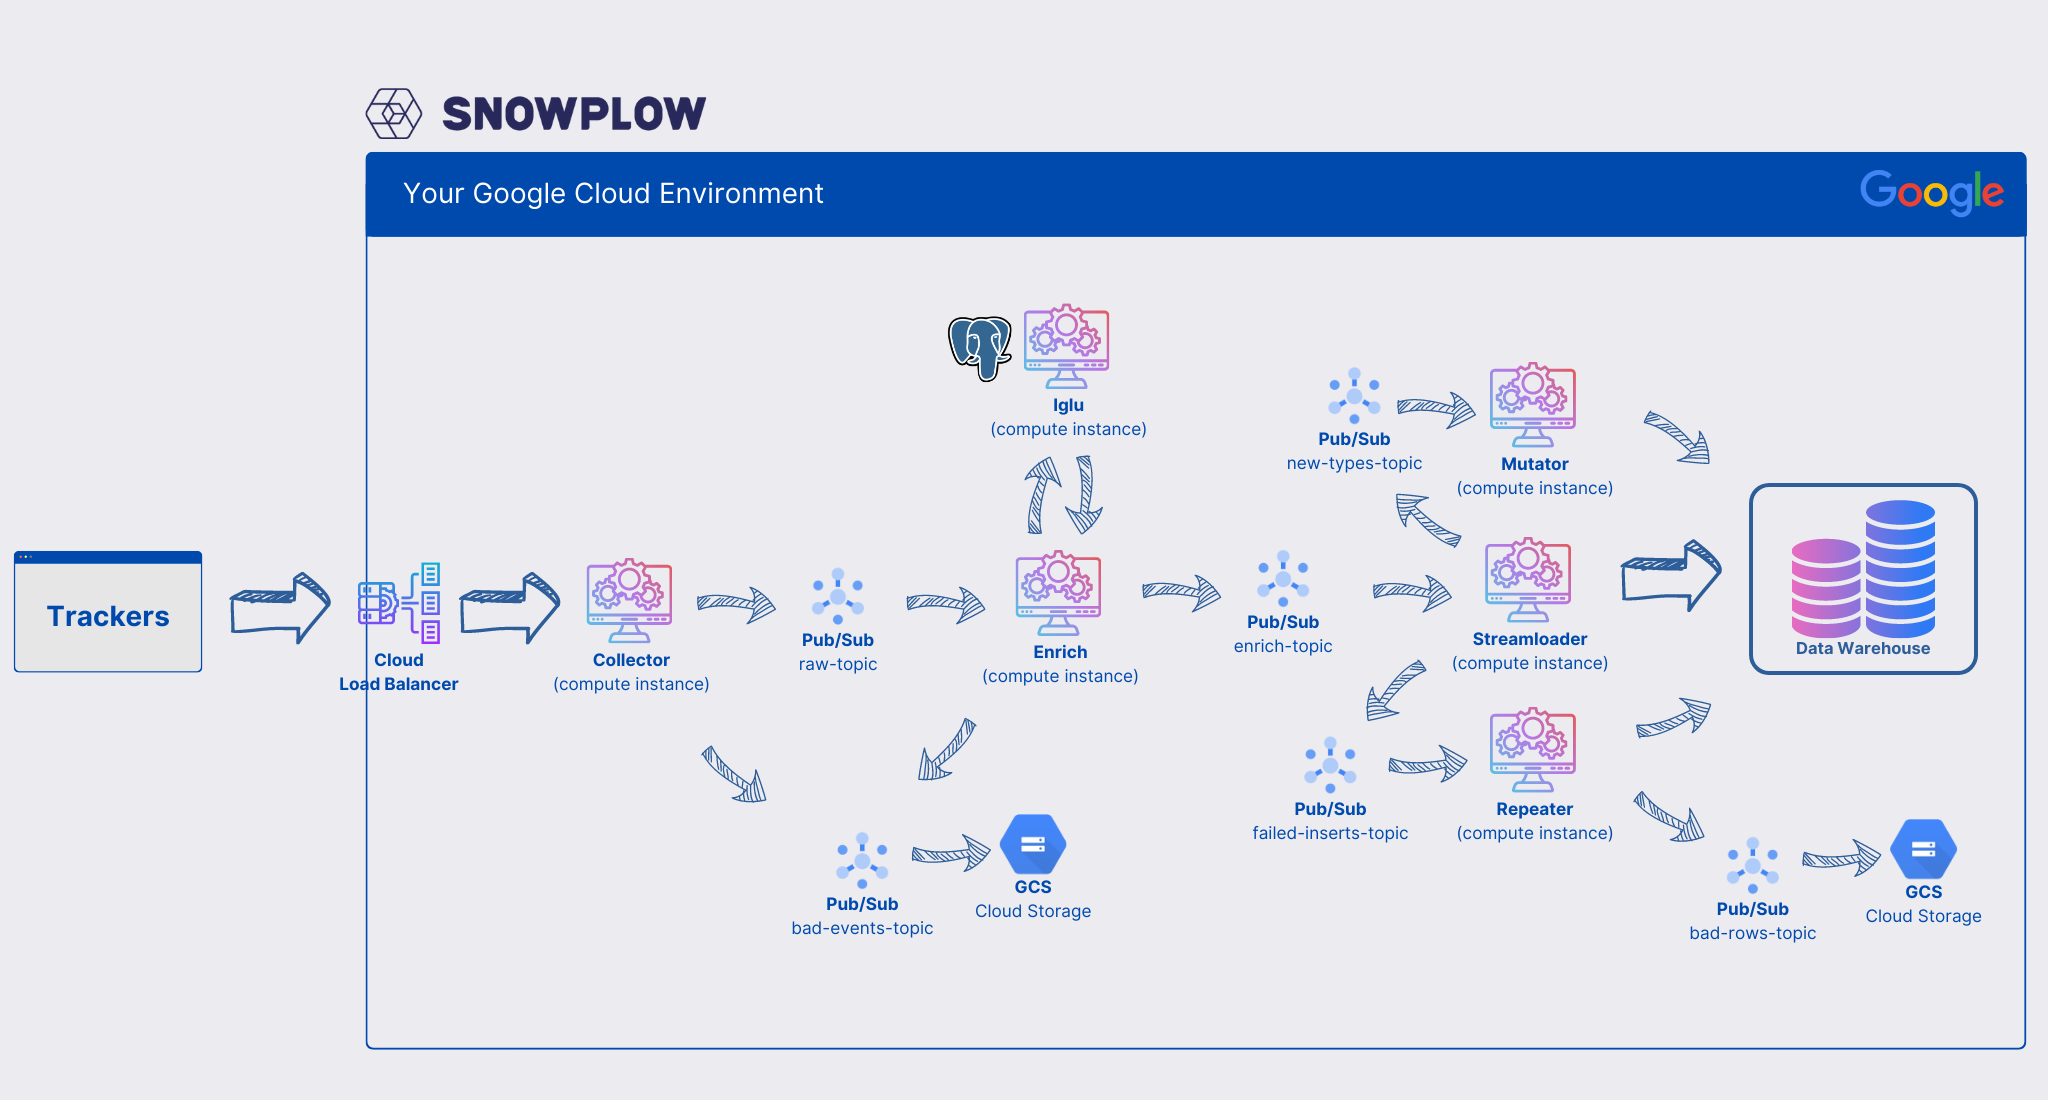 Snowplow architecture on GCP